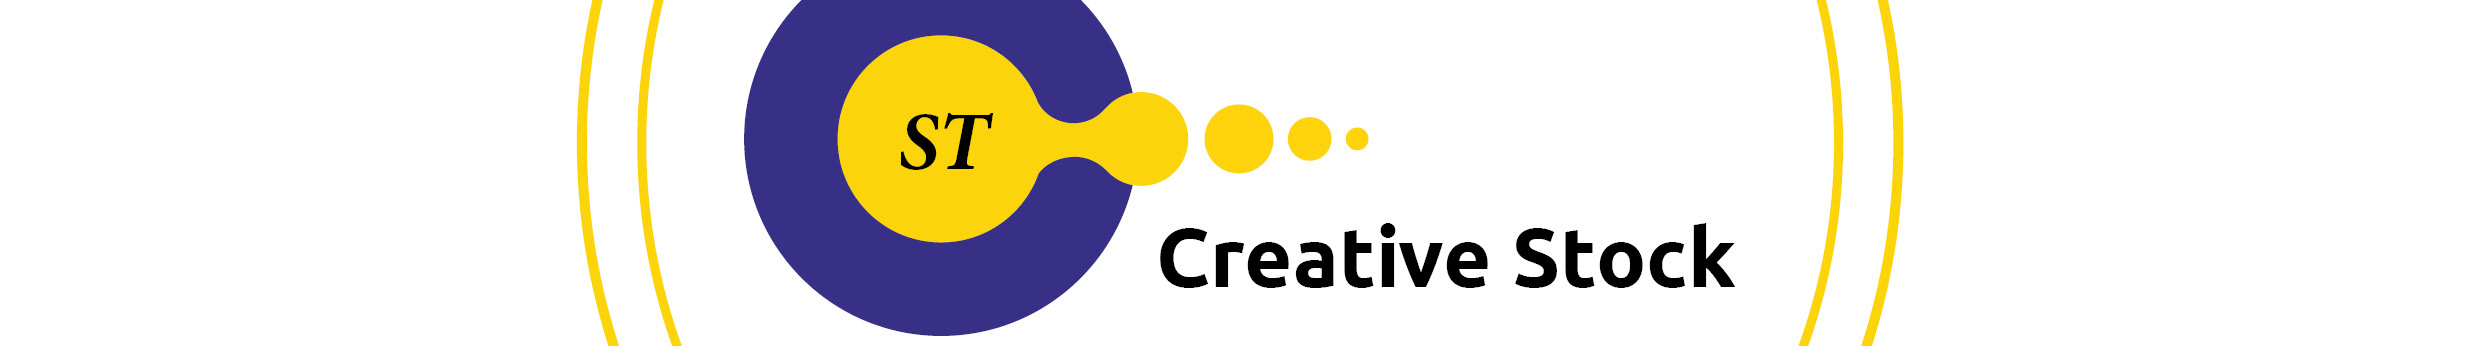 Creative Stock Template's profile banner